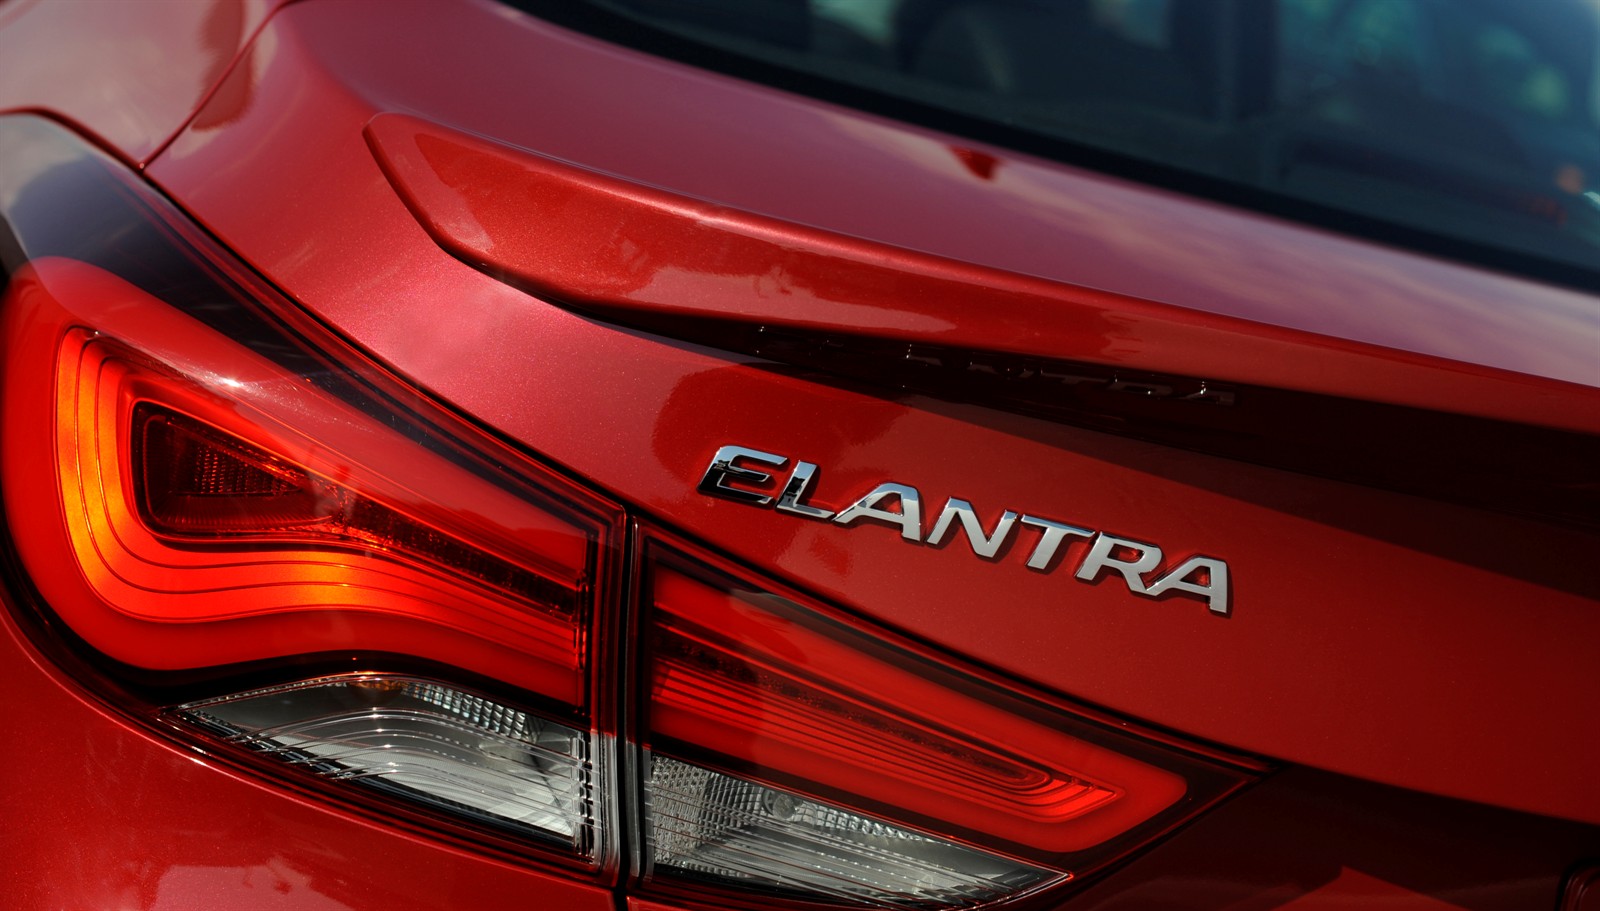 Hyundai Elantra Surpasses 10 Million Units in Global Sales